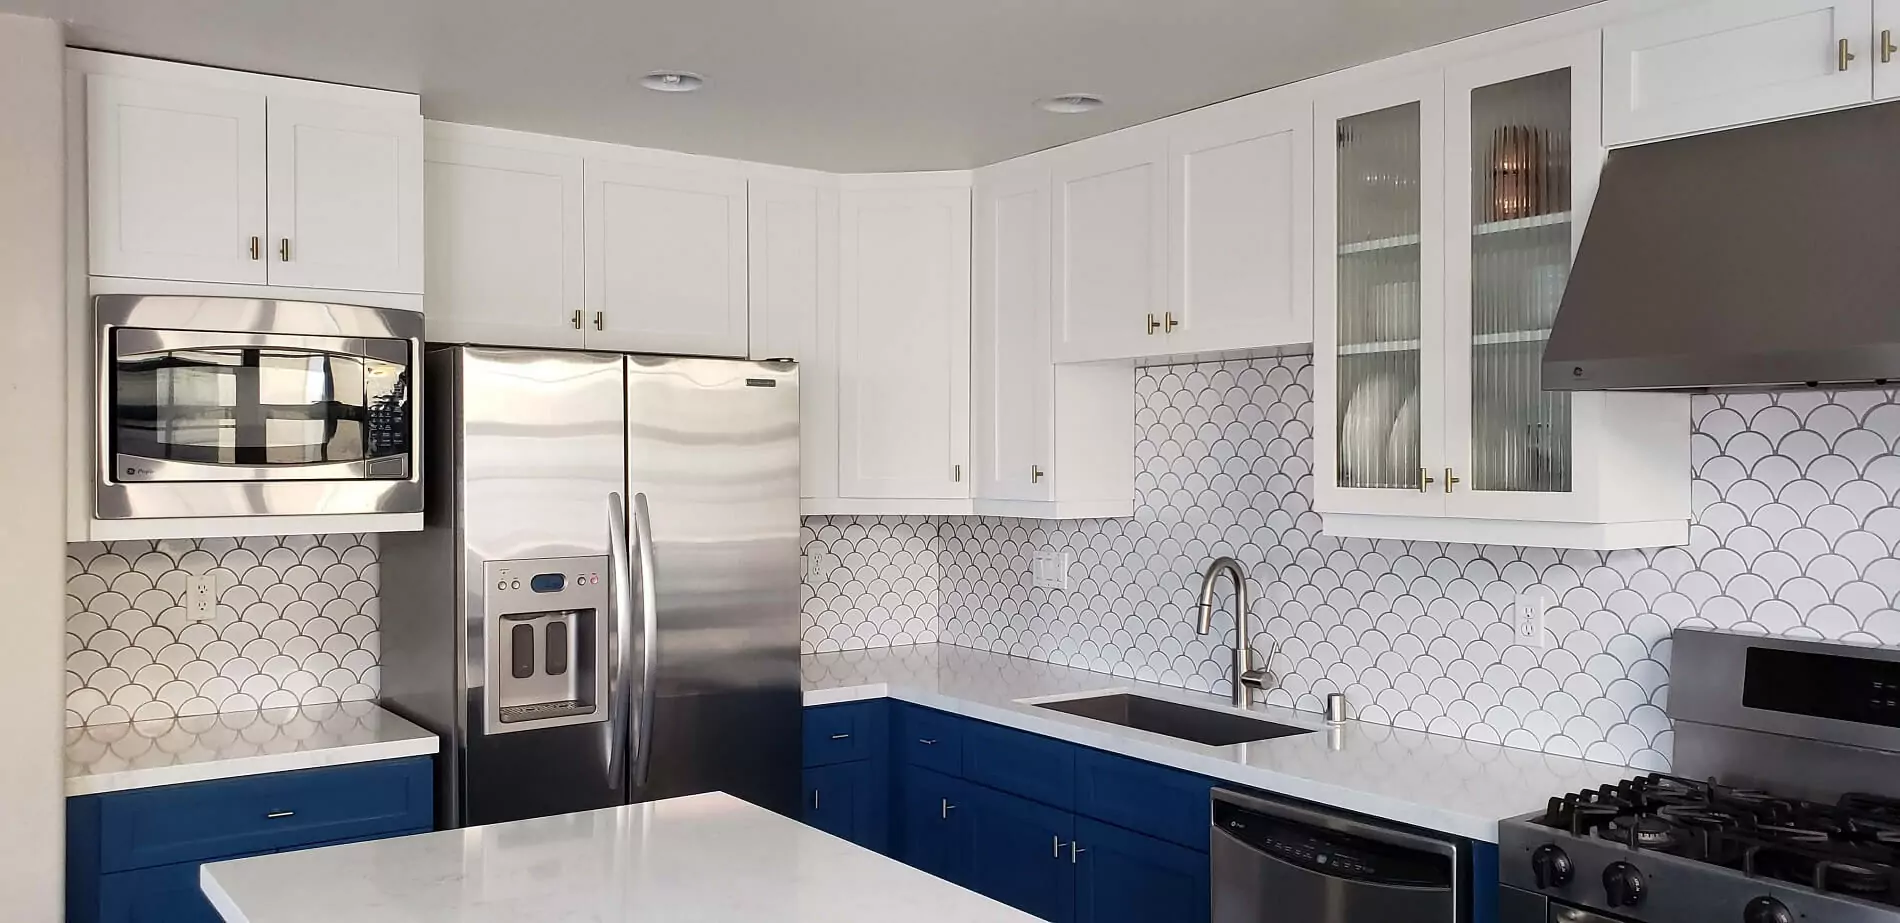 Navy Blue & White Kitchen Renovation | Groysman Construction Remodeling | 15